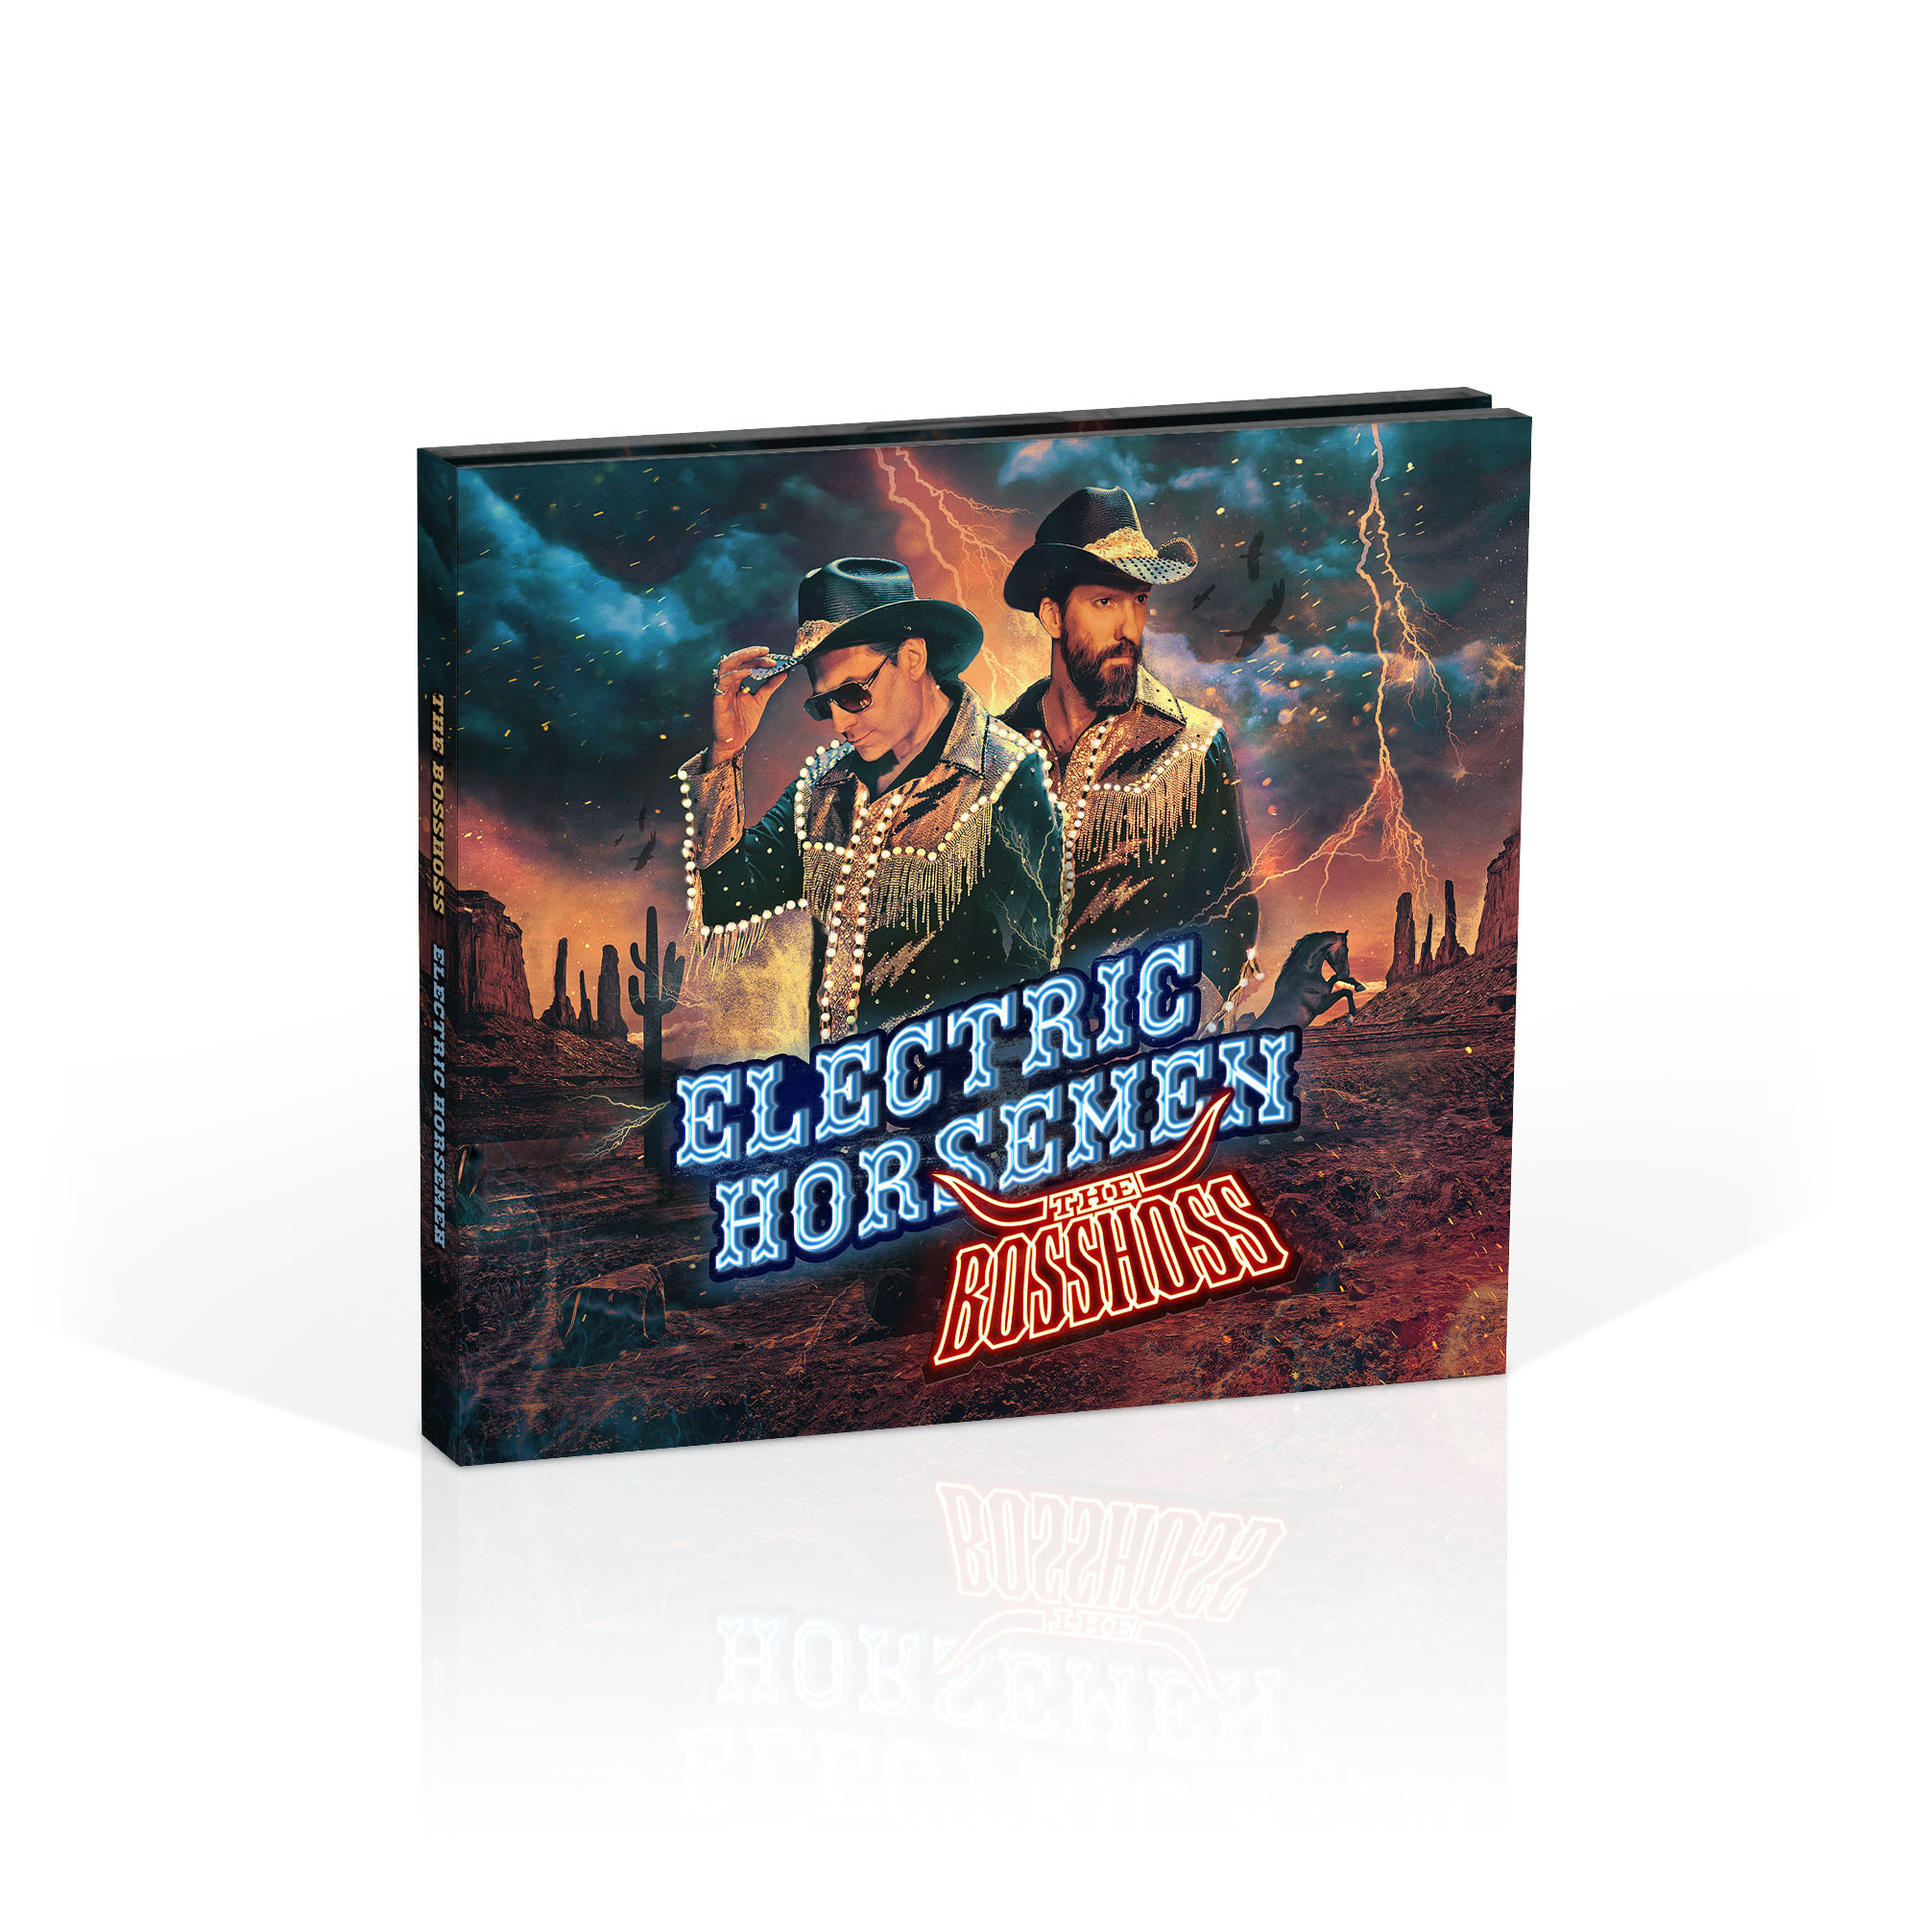 The BossHoss Edt.) (CD) - - (Deluxe Horsemen Electric